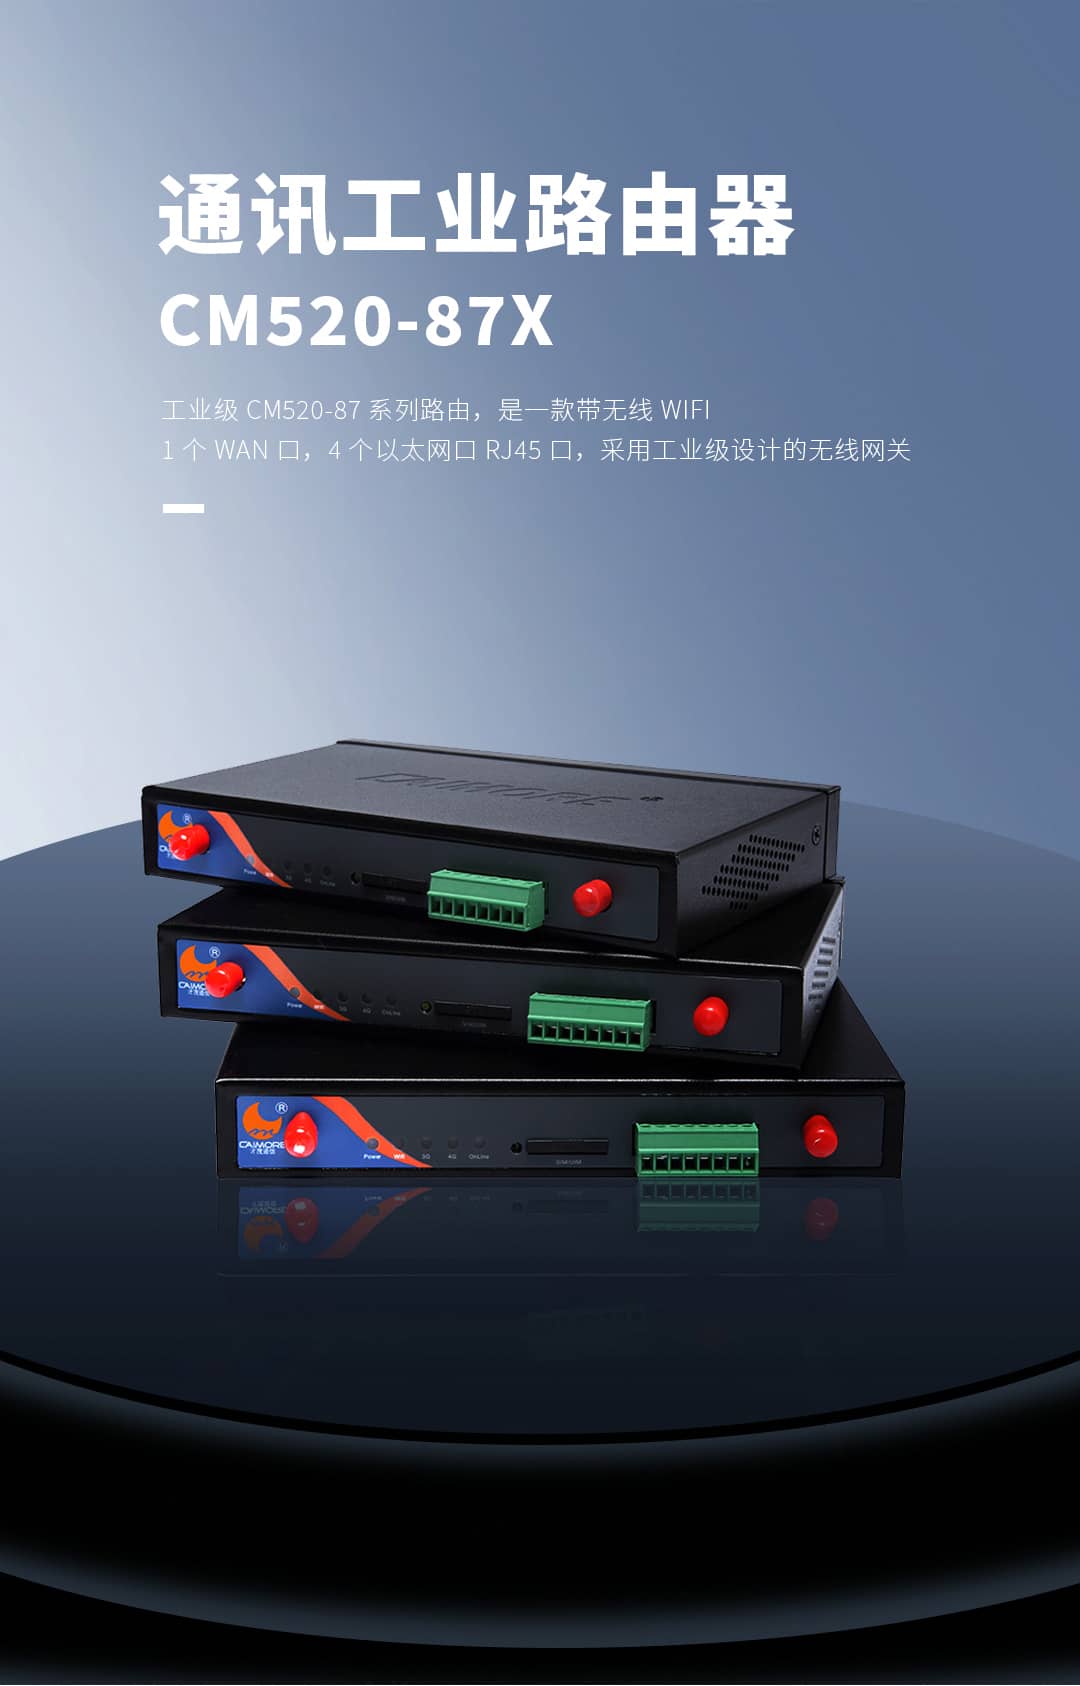 CM520-87X五口WIFI 4G/5G工业路由器